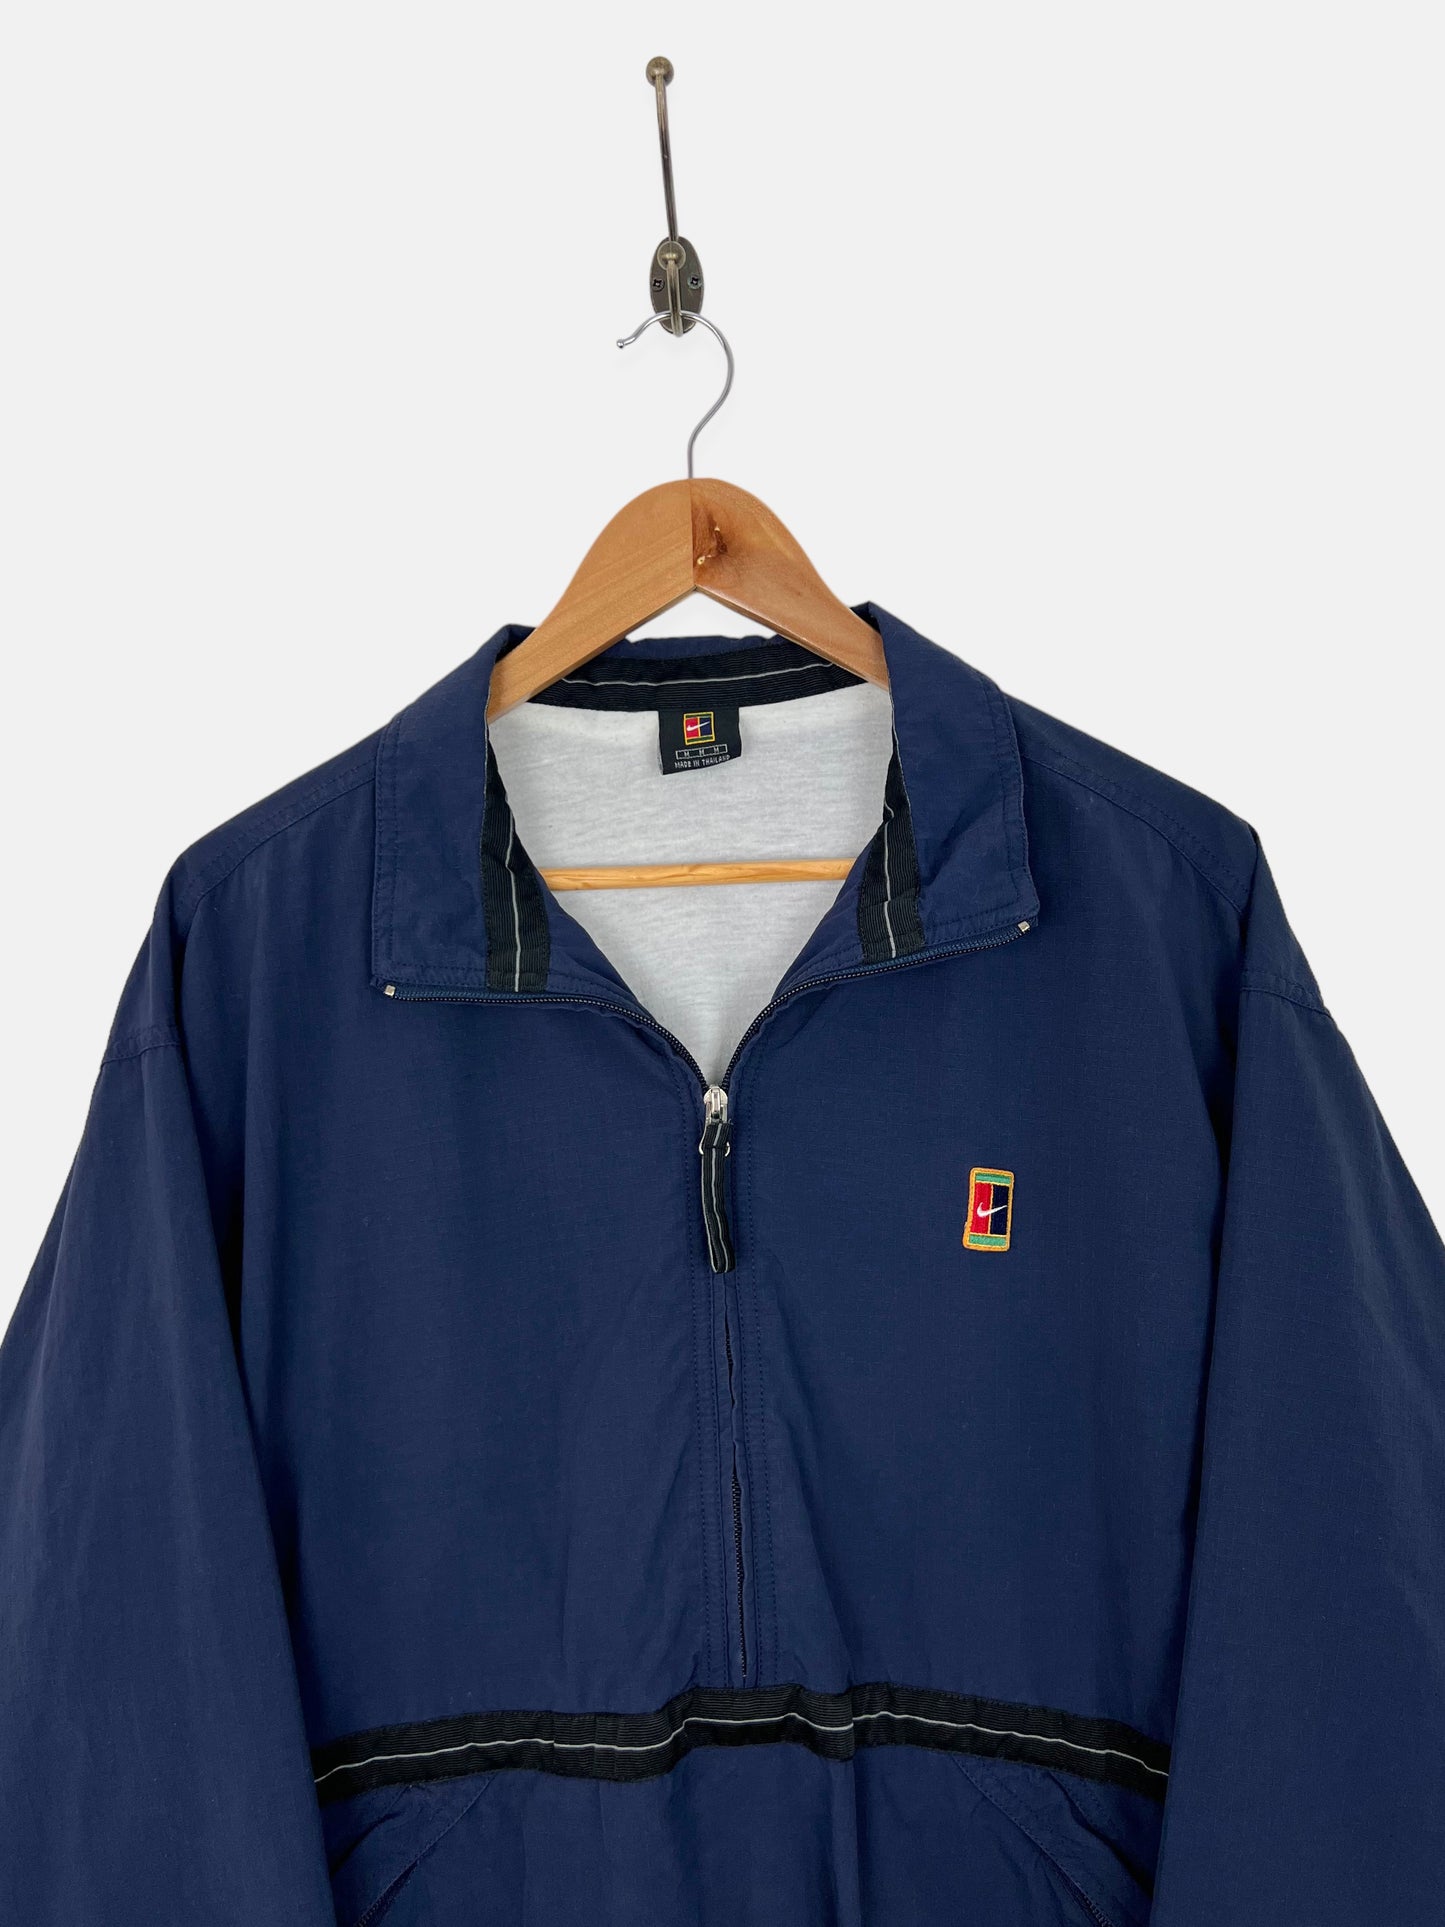 90's Nike Embroidered Vintage Jacket Size M-L